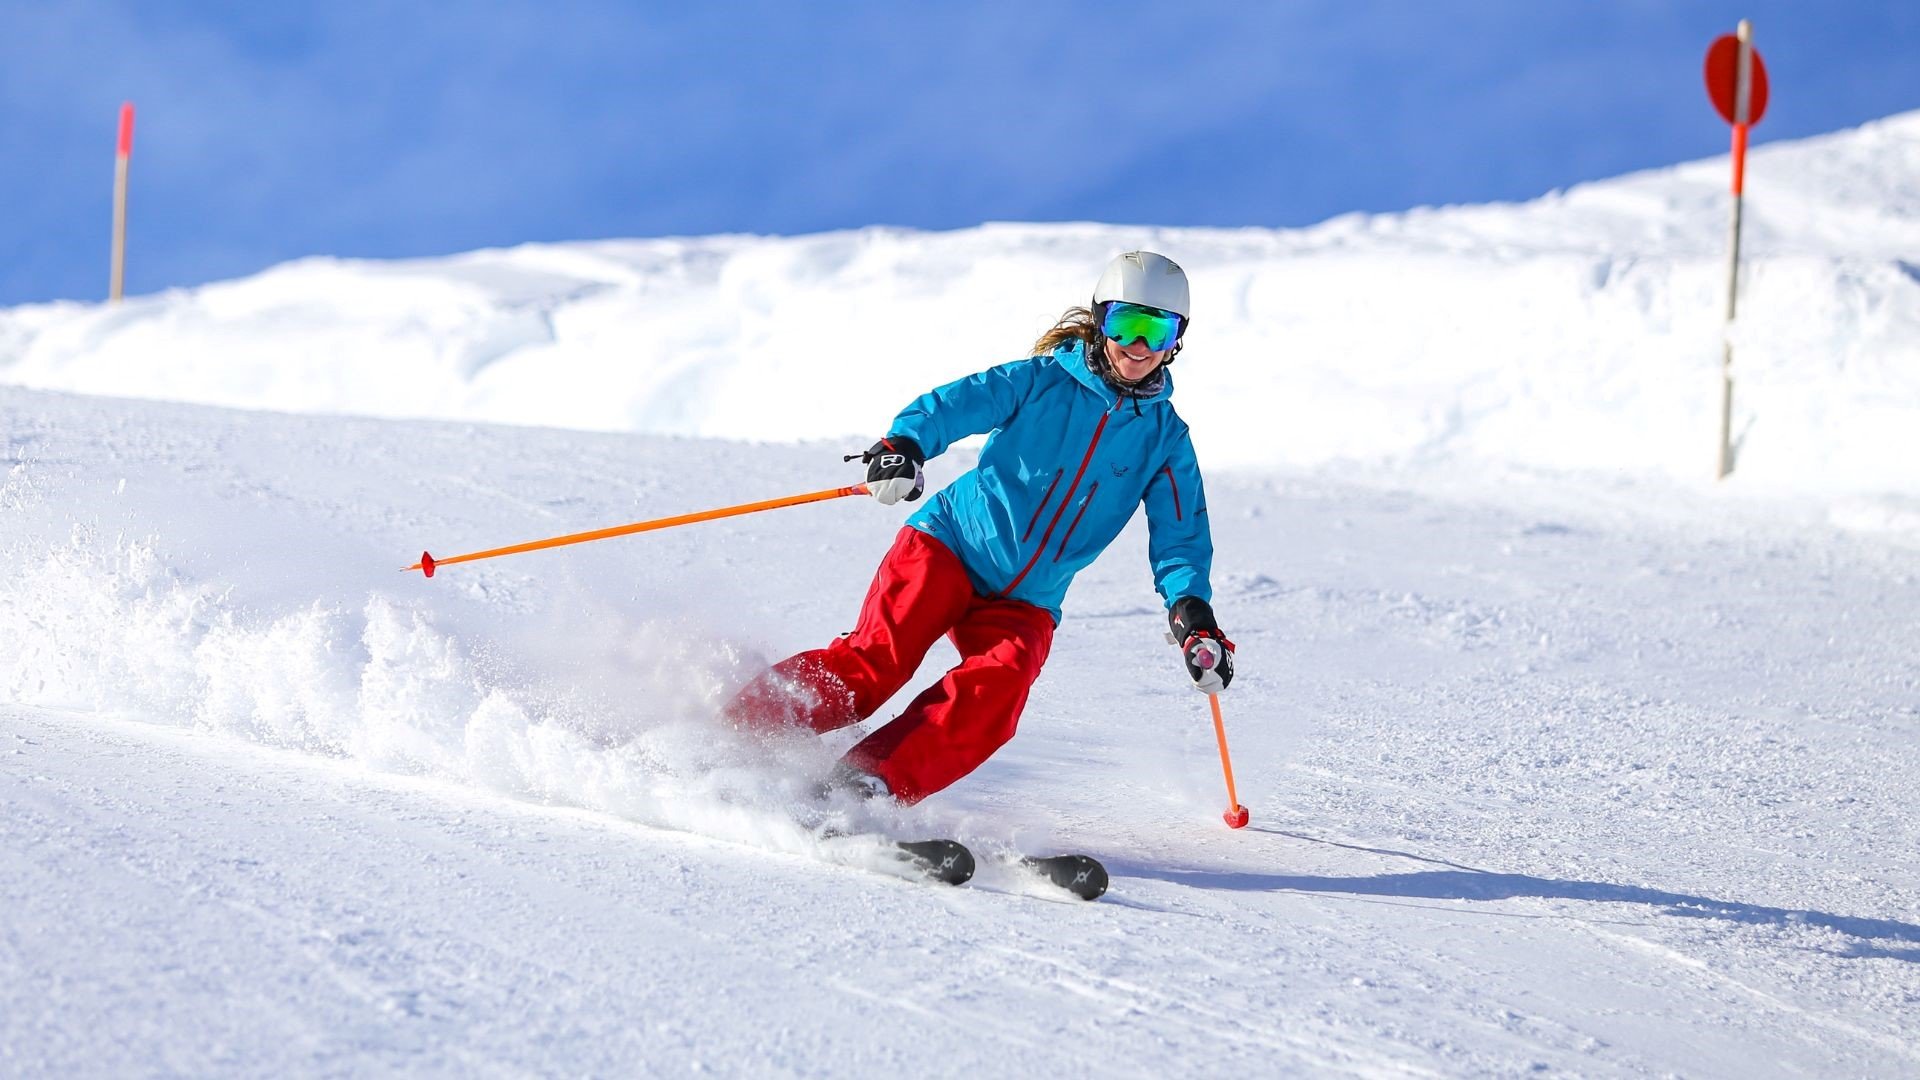 Female Riding on Ski Blades on Snow Covered Ground